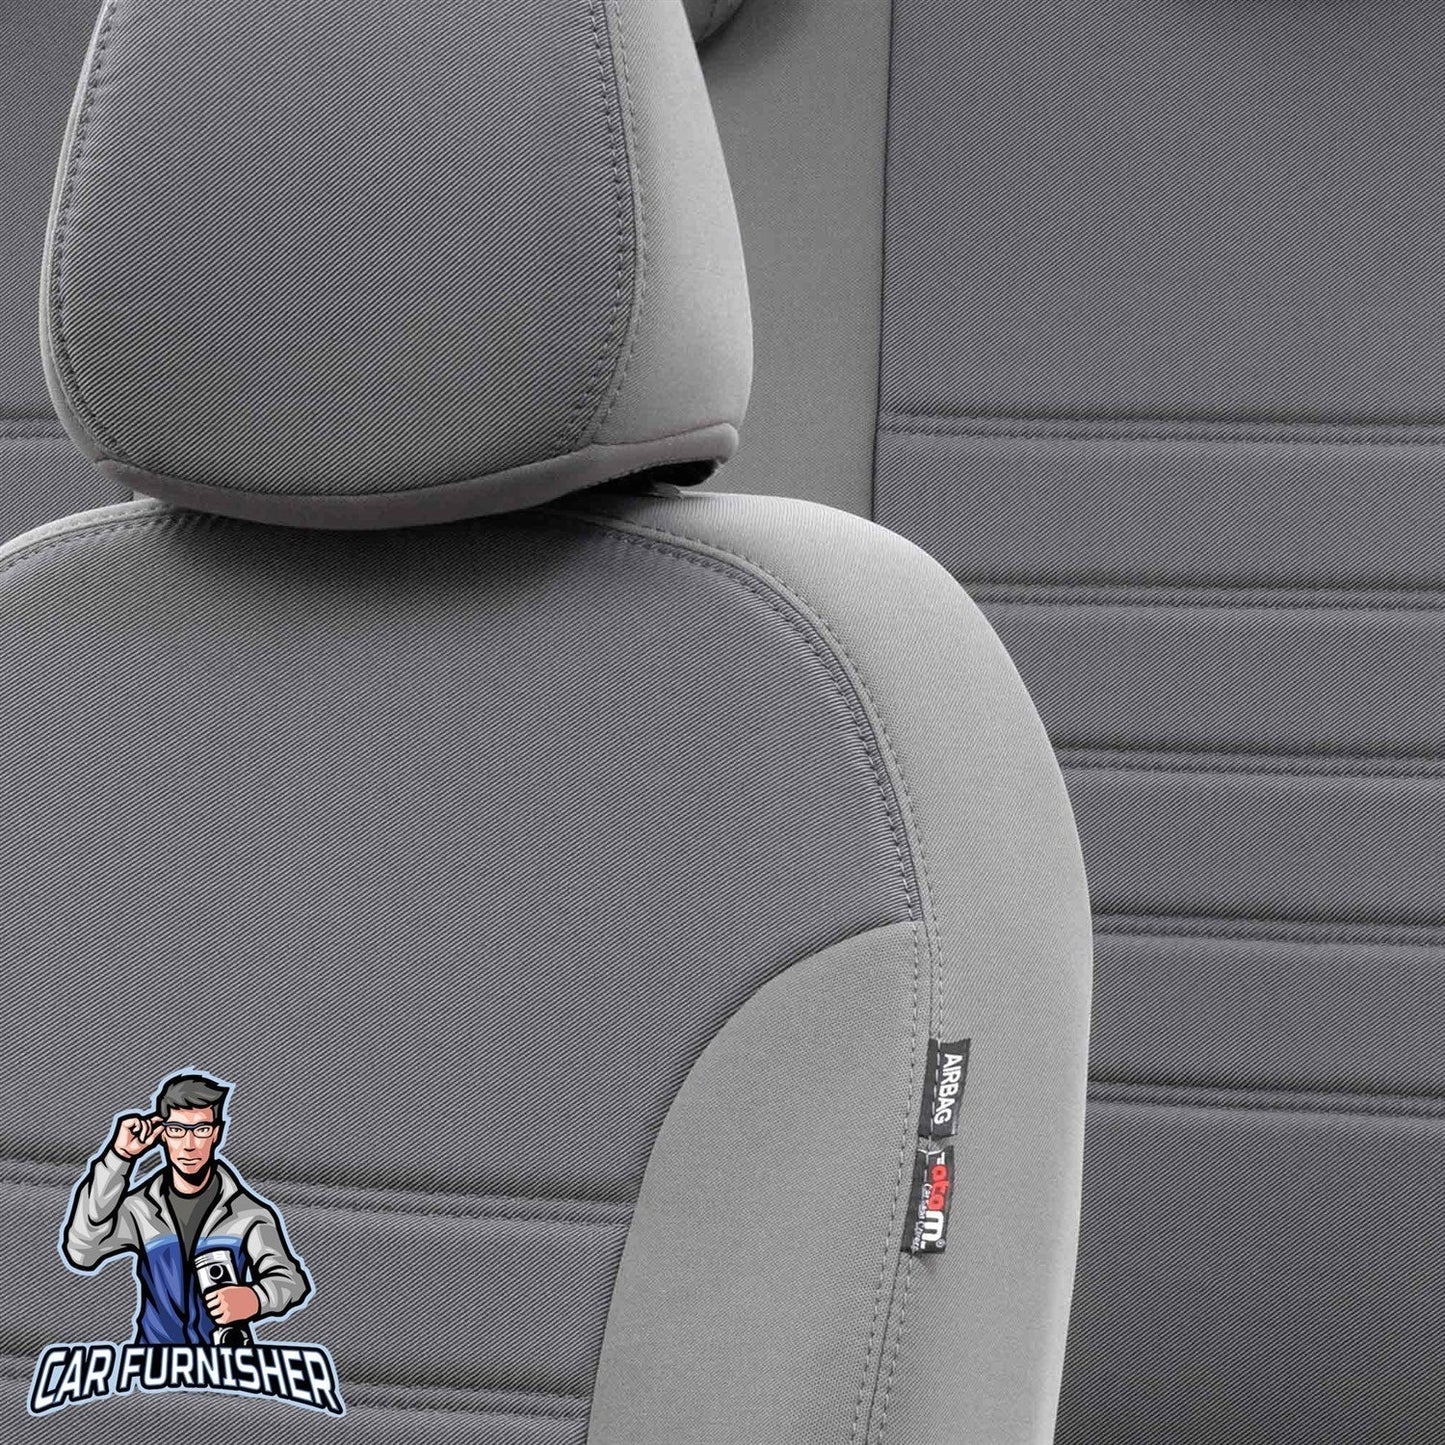 Peugeot 108 Seat Cover Original Jacquard Design Gray Jacquard Fabric